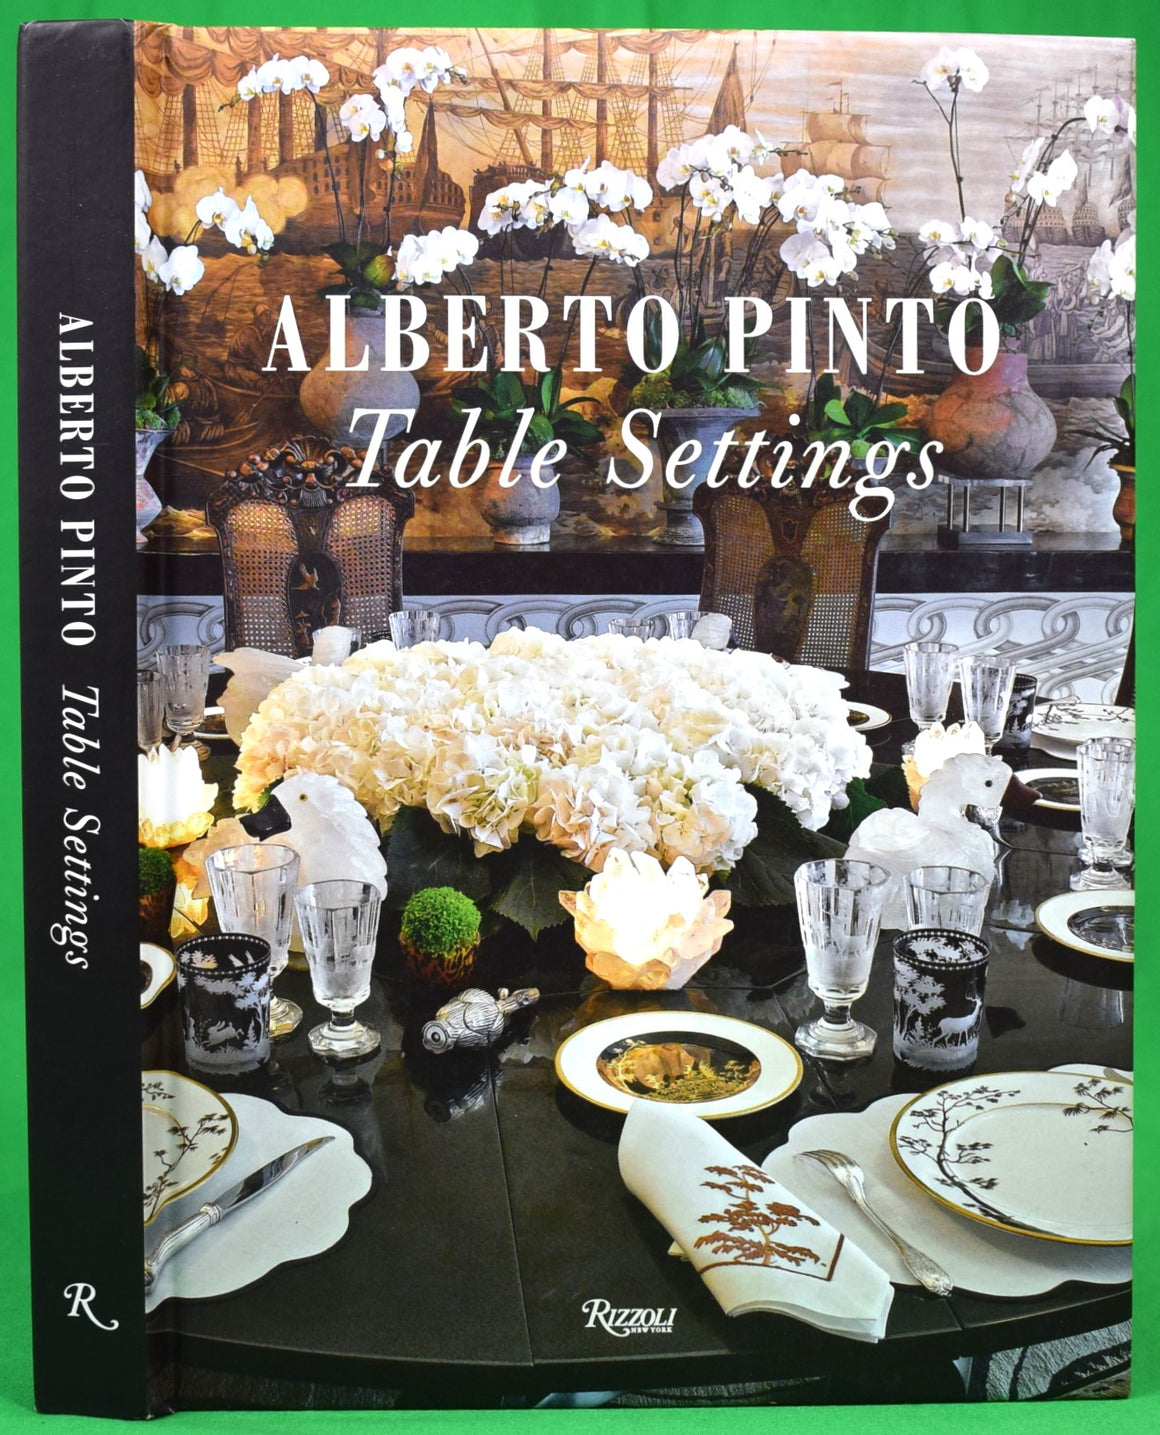 "Alberto Pinto Table Settings" 2009 MCDOWELL, Dane